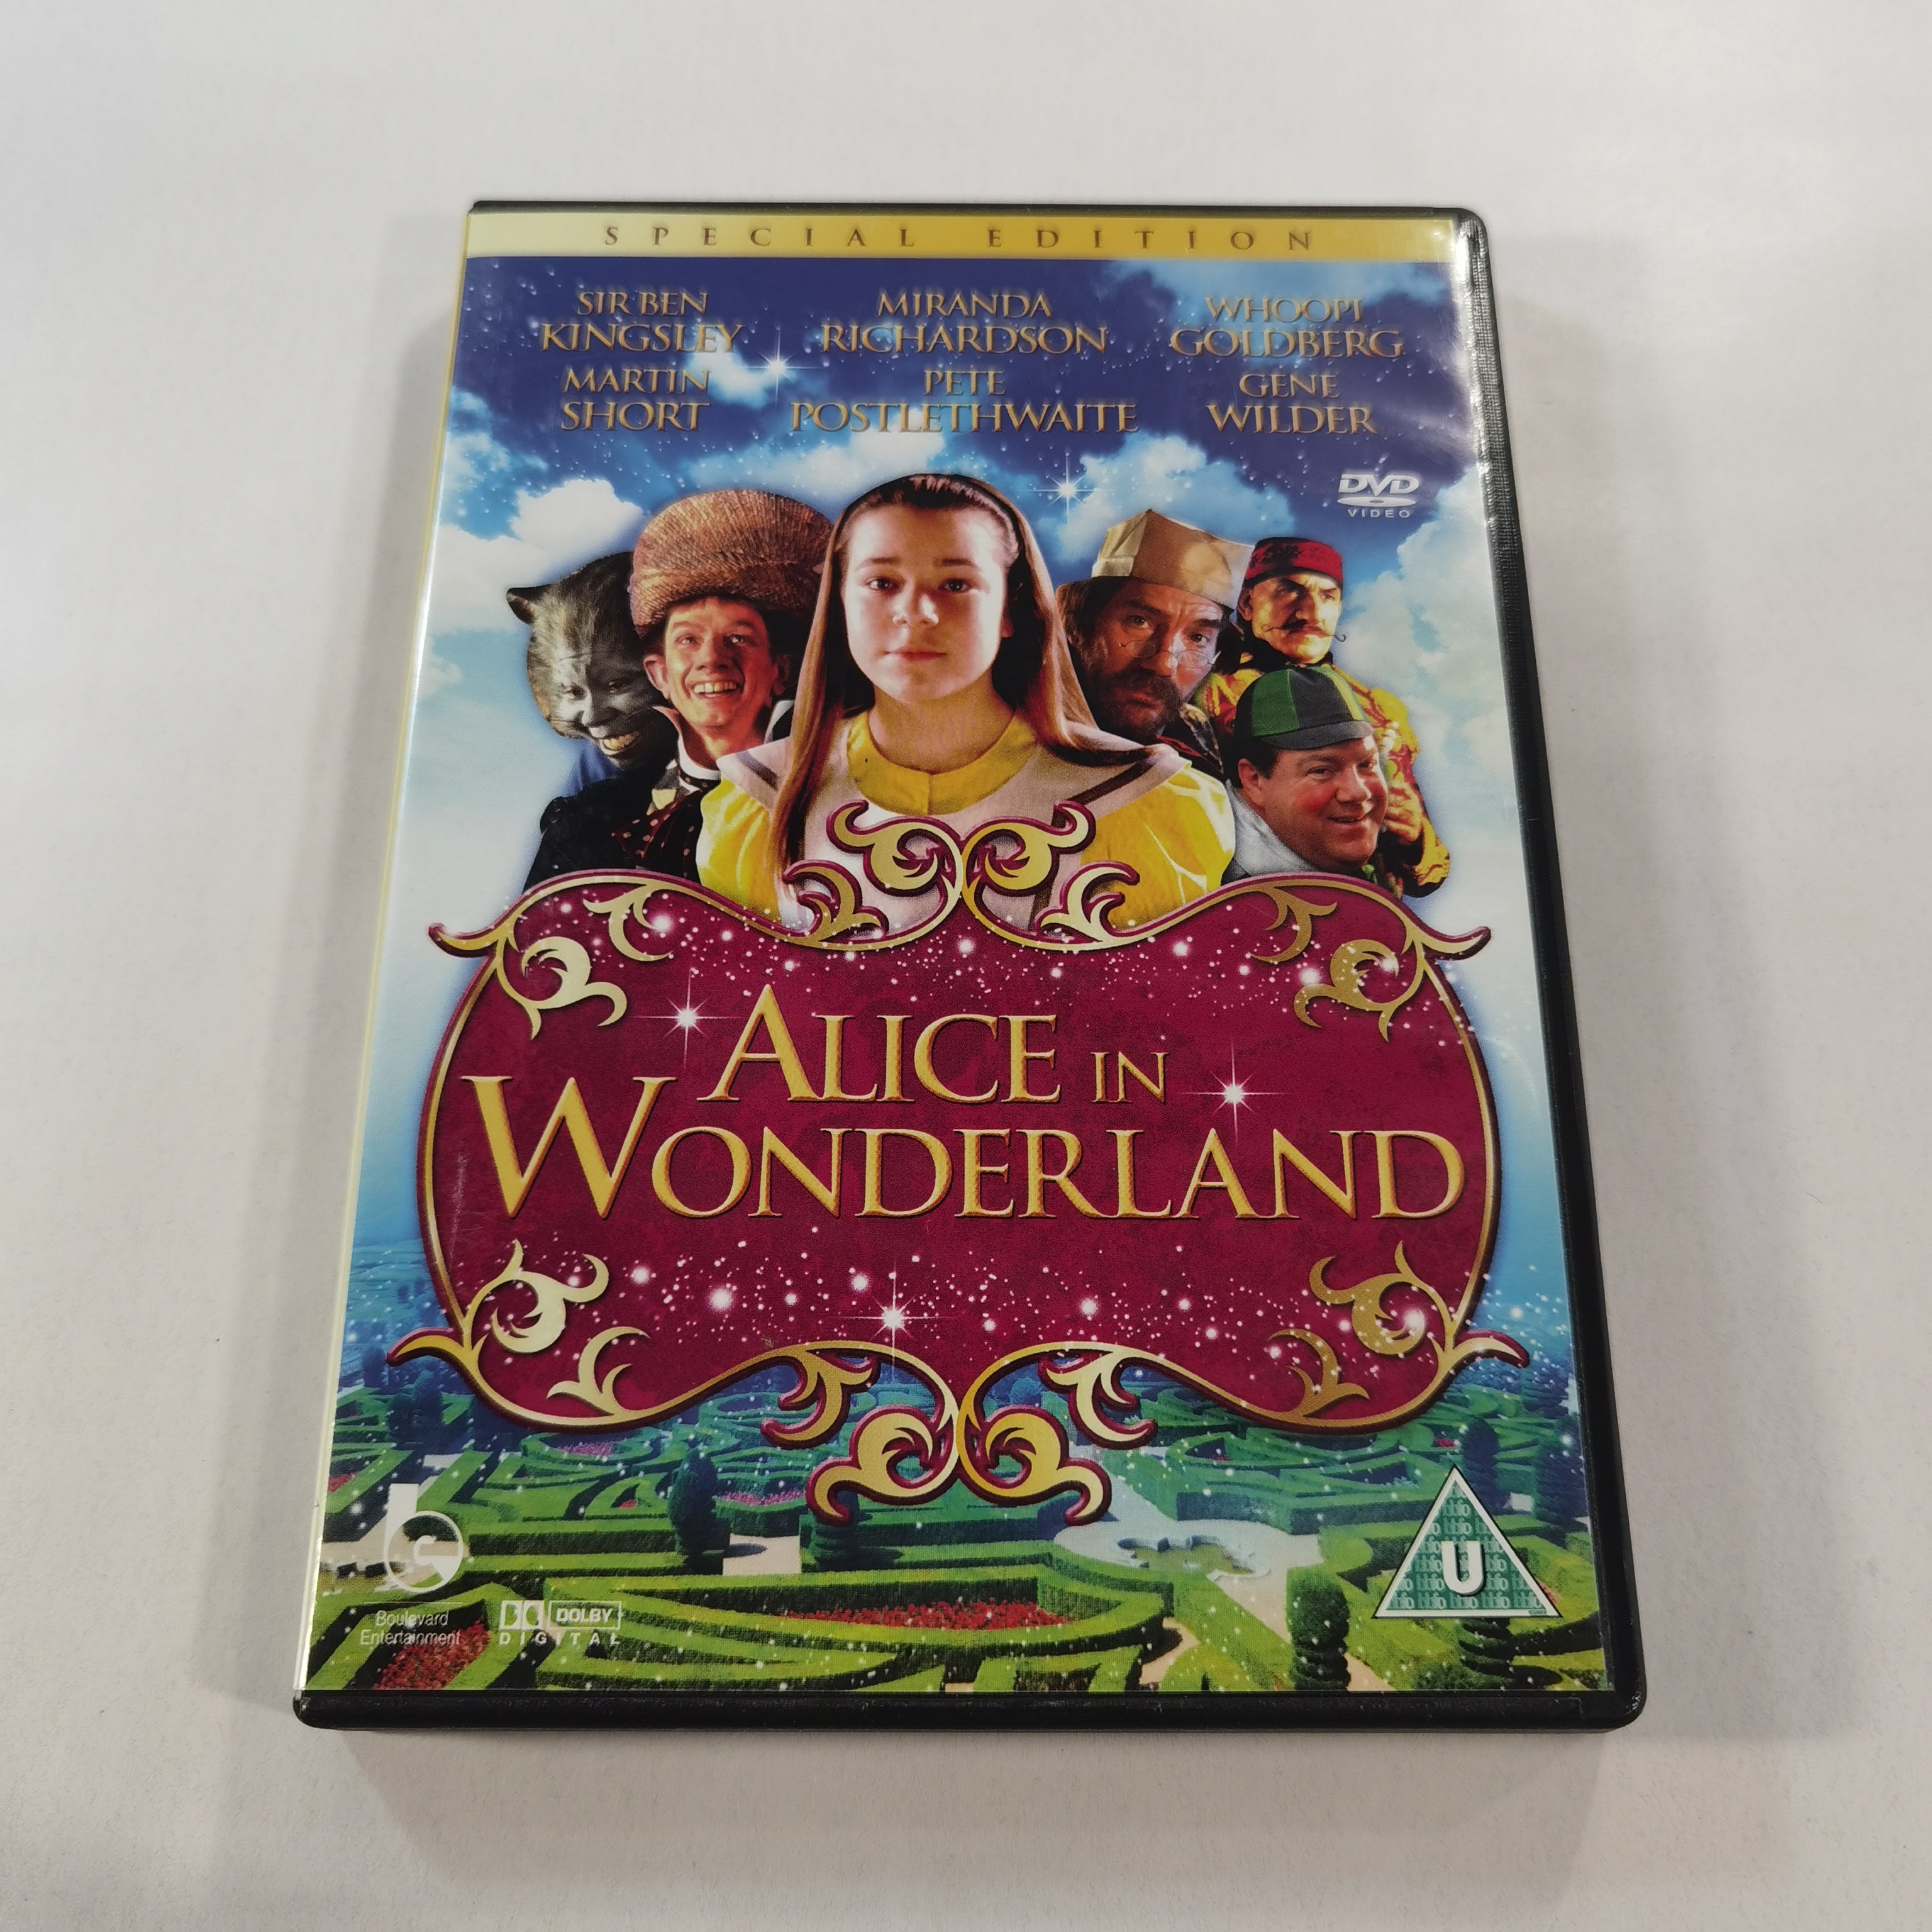 Alice in Wonderland (1999) - DVD UK 2010 Special Edition